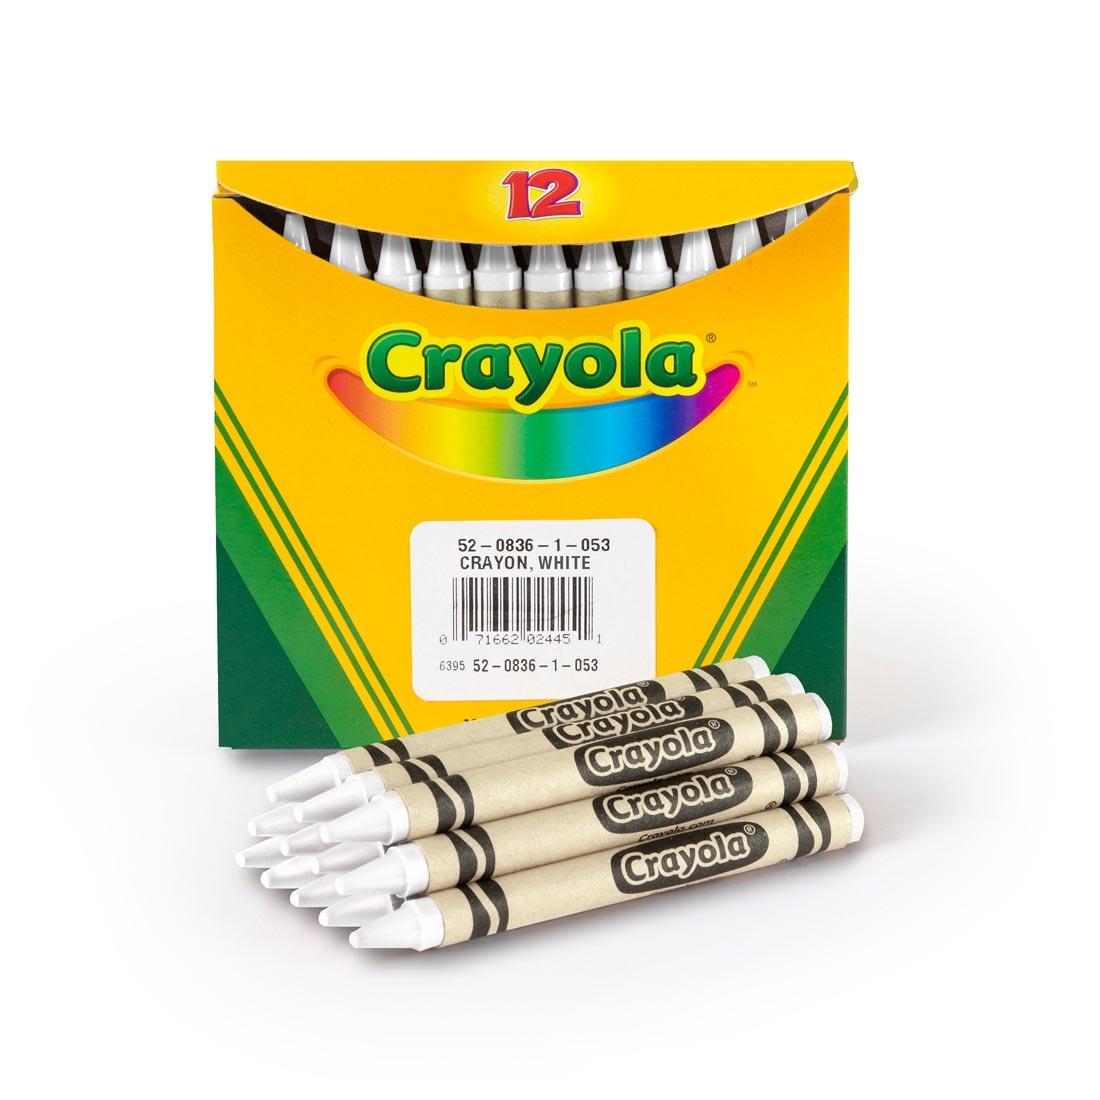 Box of Crayola Regular Crayon Refills with 12 White Crayons